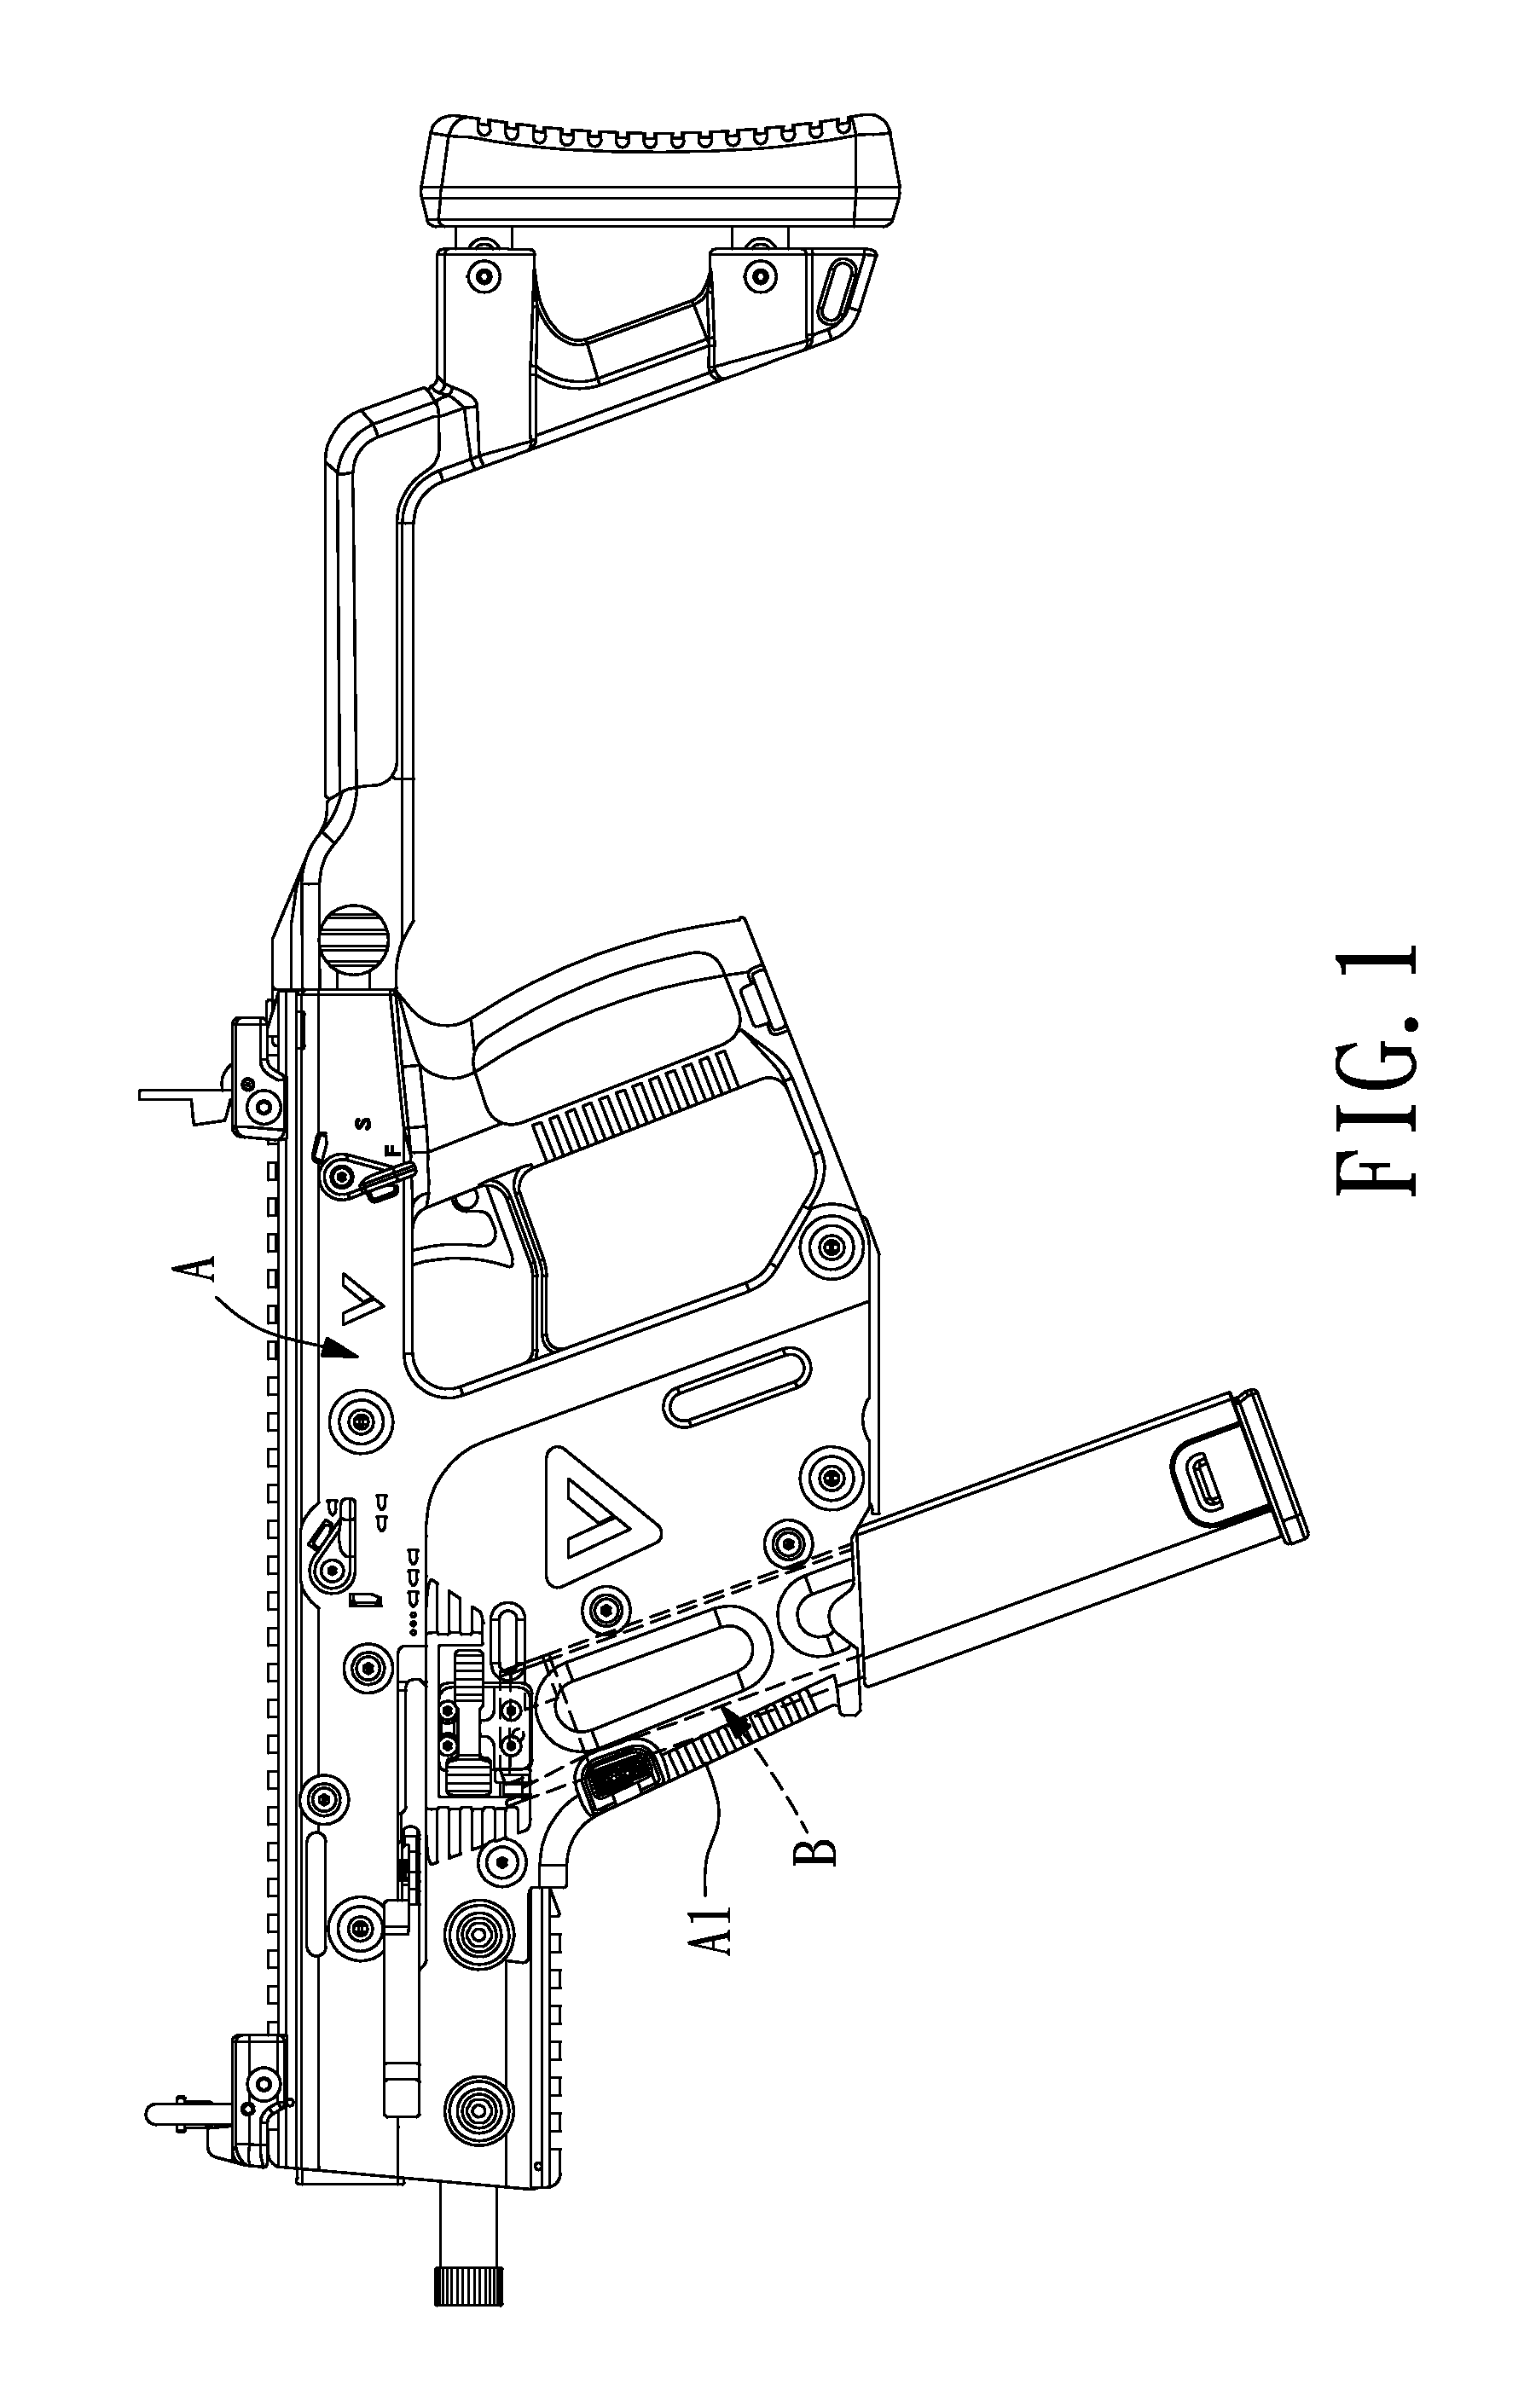 Firing linkage mechanism for toy submachine gun